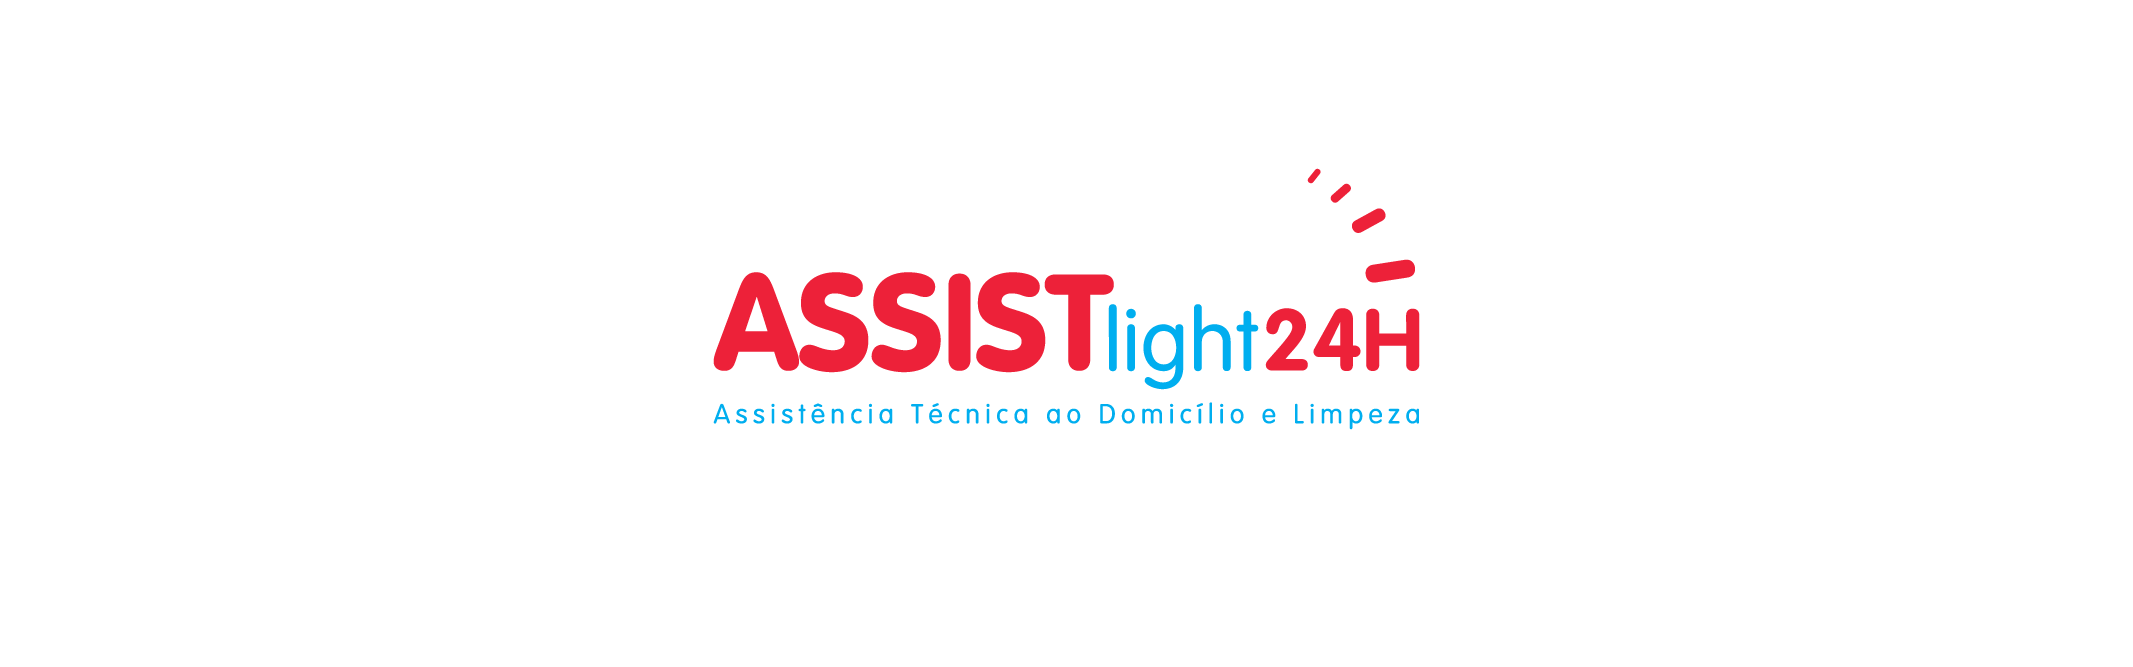 ASSISTlight24H